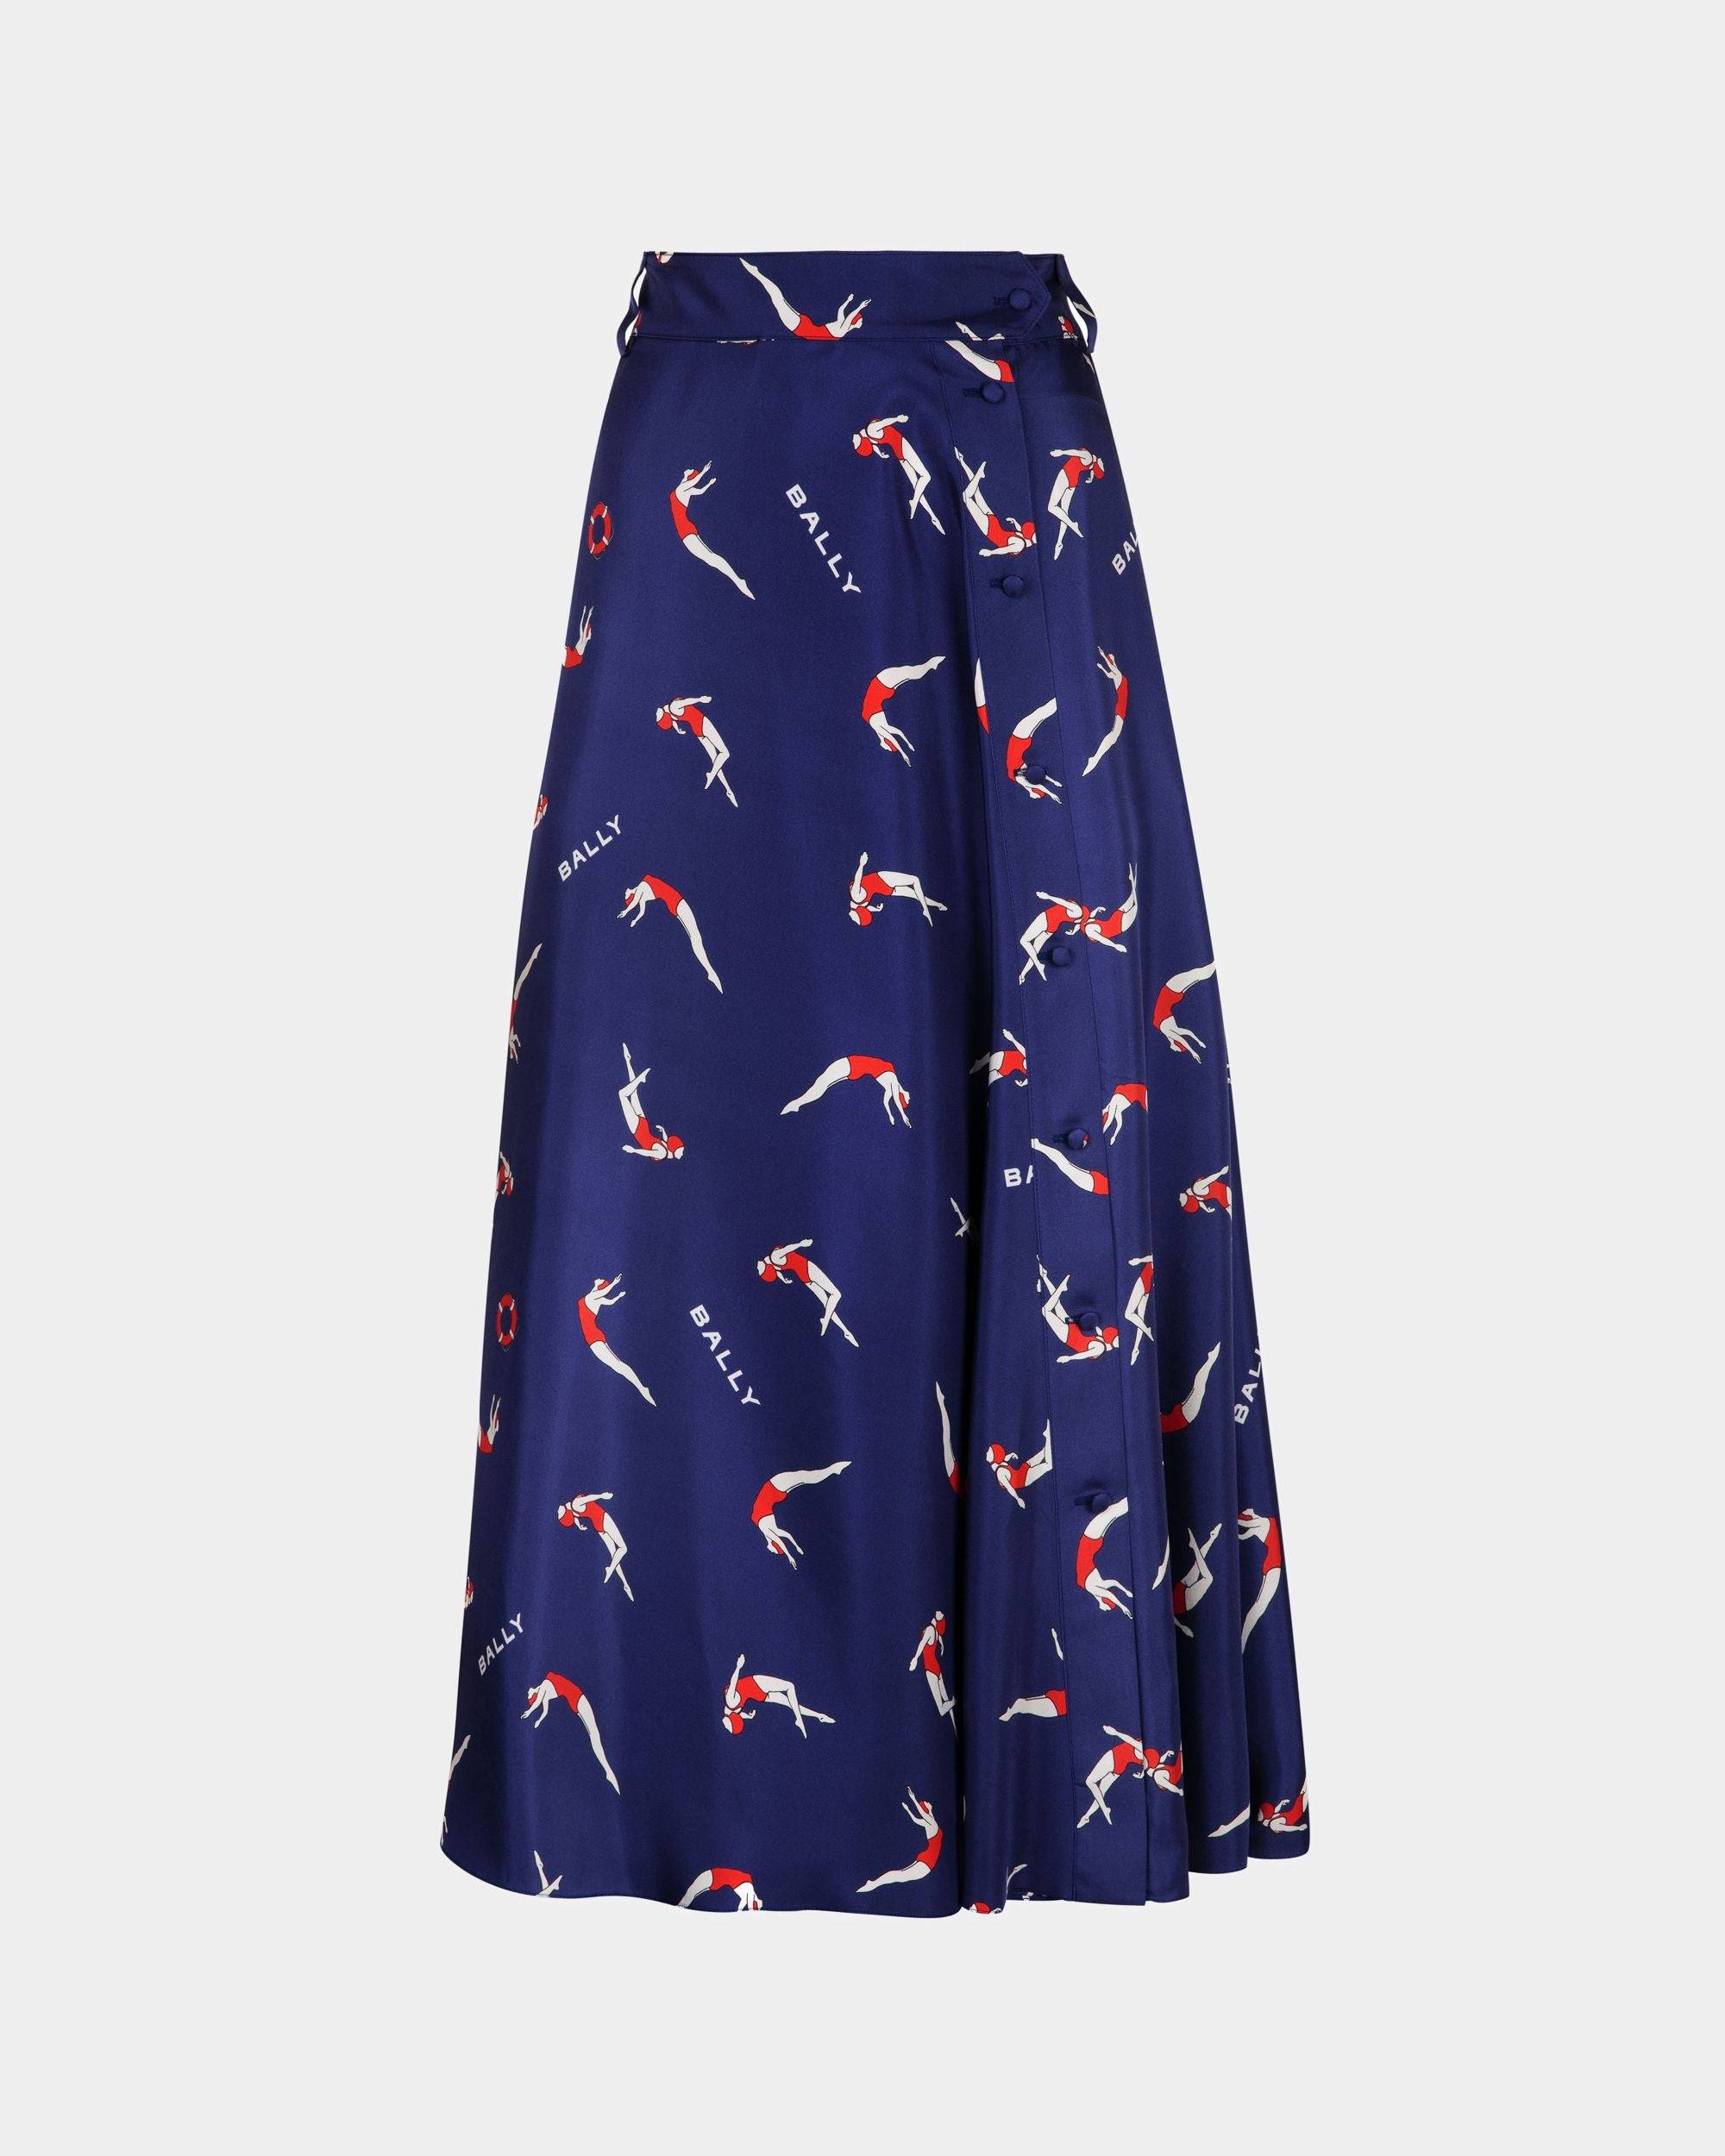 Women's Printed Midi Skirt in Blue Silk | Bally | Still Life Front